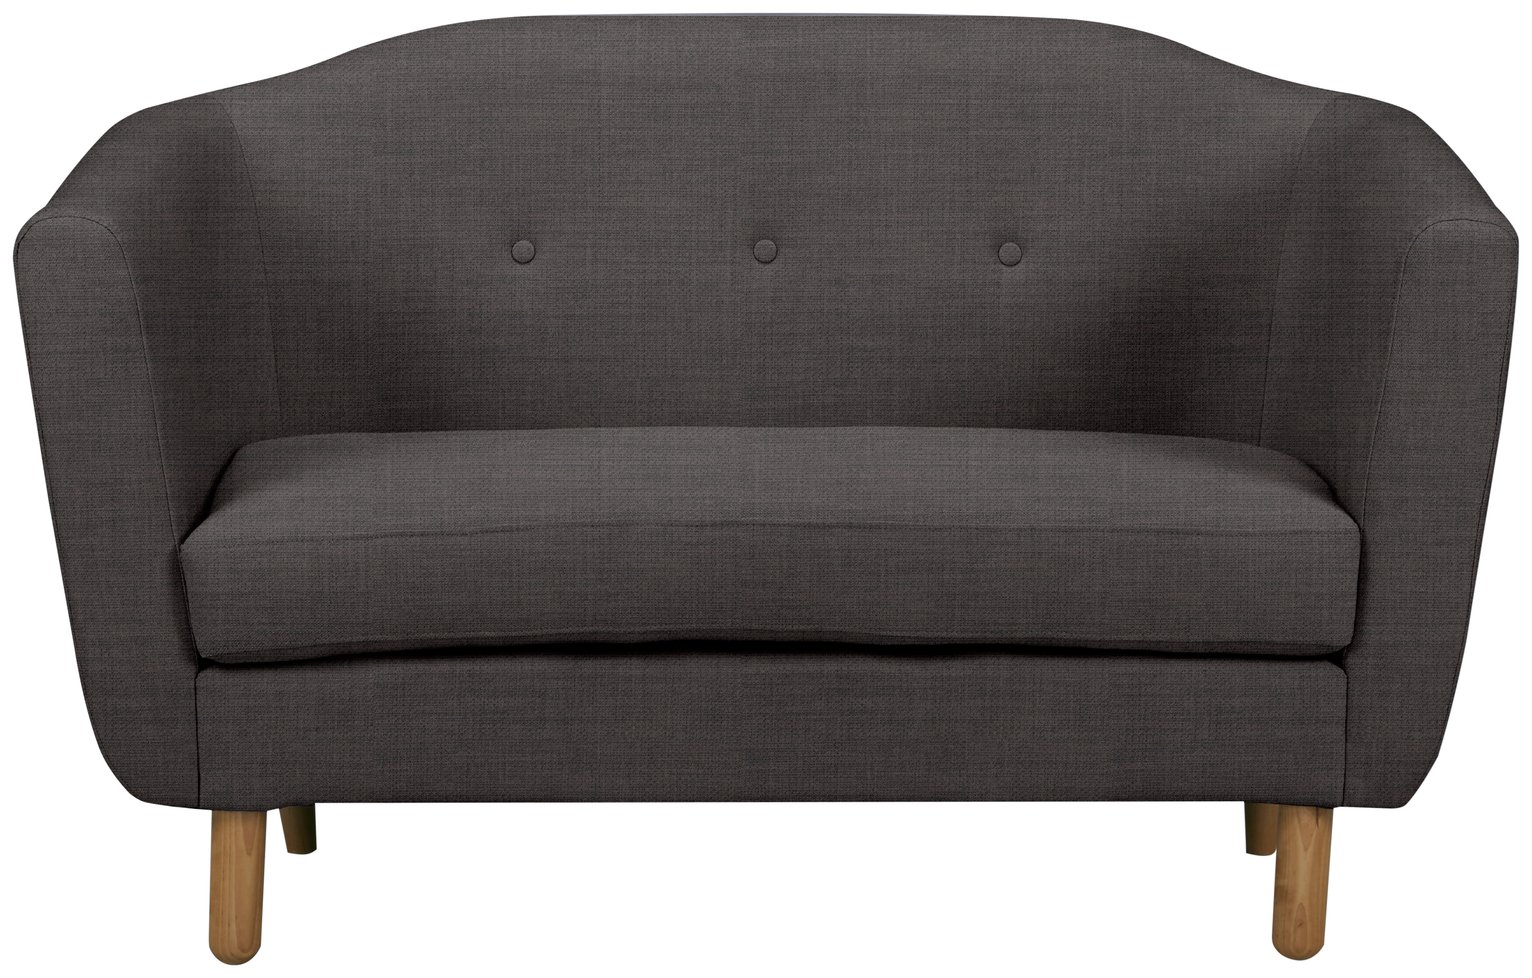 Argos Home Elin 2 Seater Fabric Sofa - Charcoal